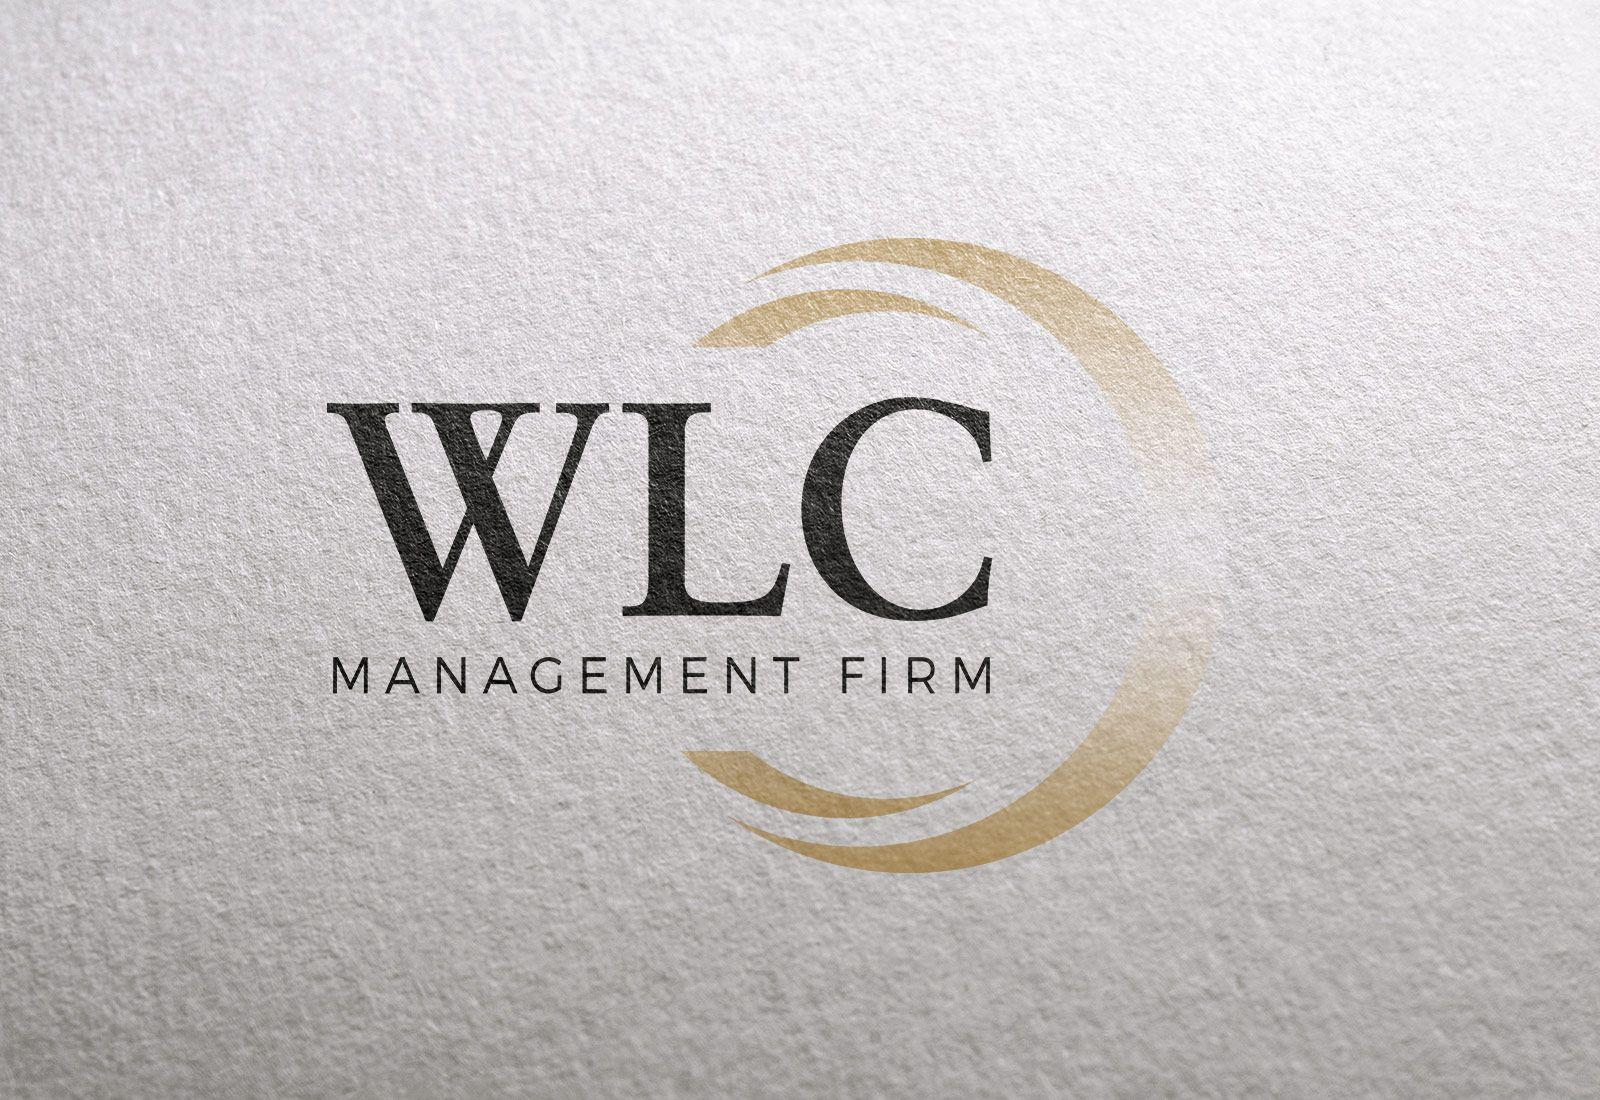 WLC Logo - WLC Management Firm - James Arthur Design Co